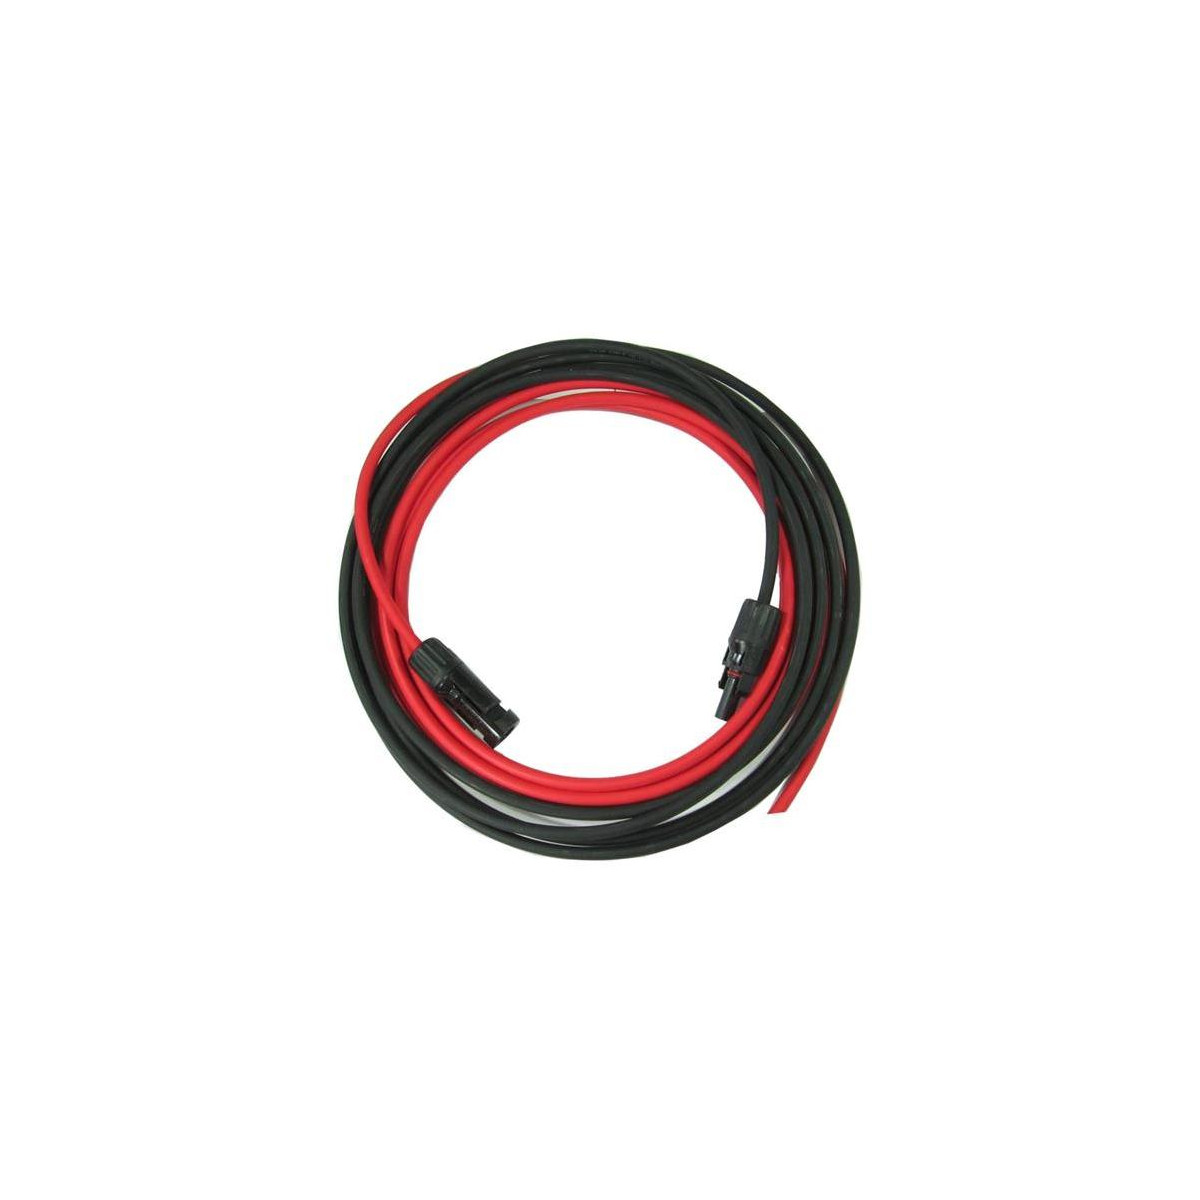 Viac oSolární kabel 6mm2, červený+černý s konektory MC4, 5m